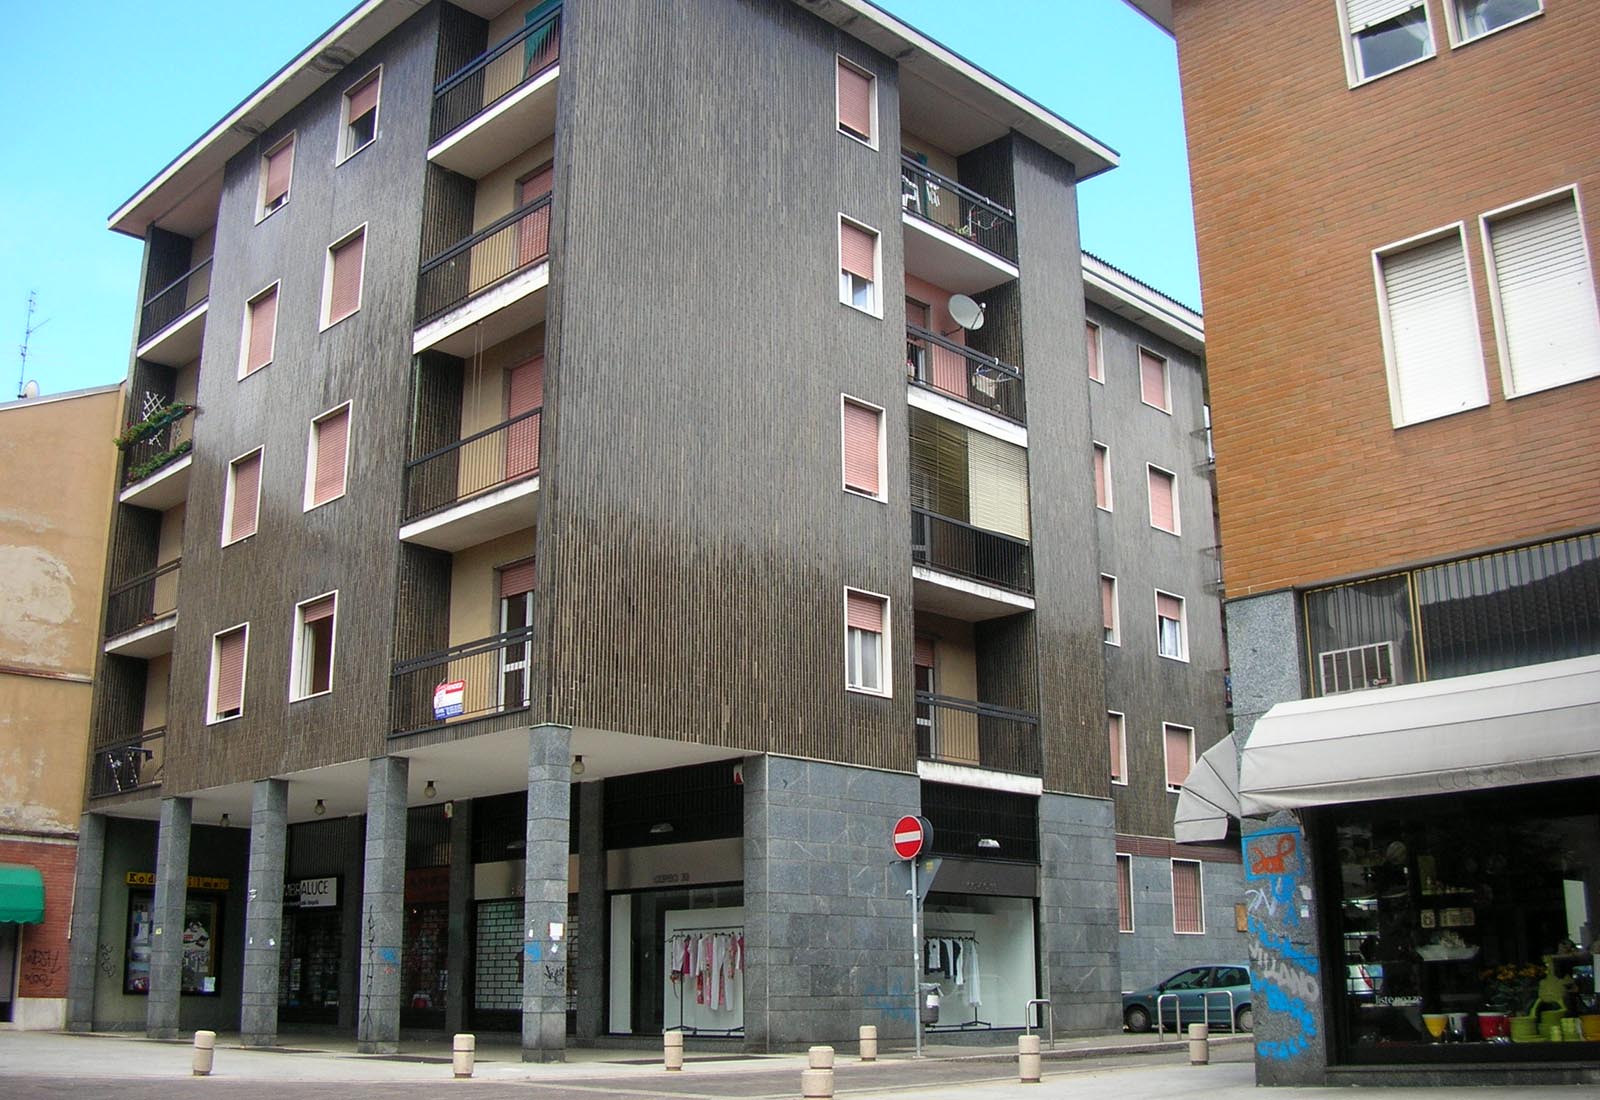 Complesso di n° 5 edifici residenziali a Rho in via Serra - Vista